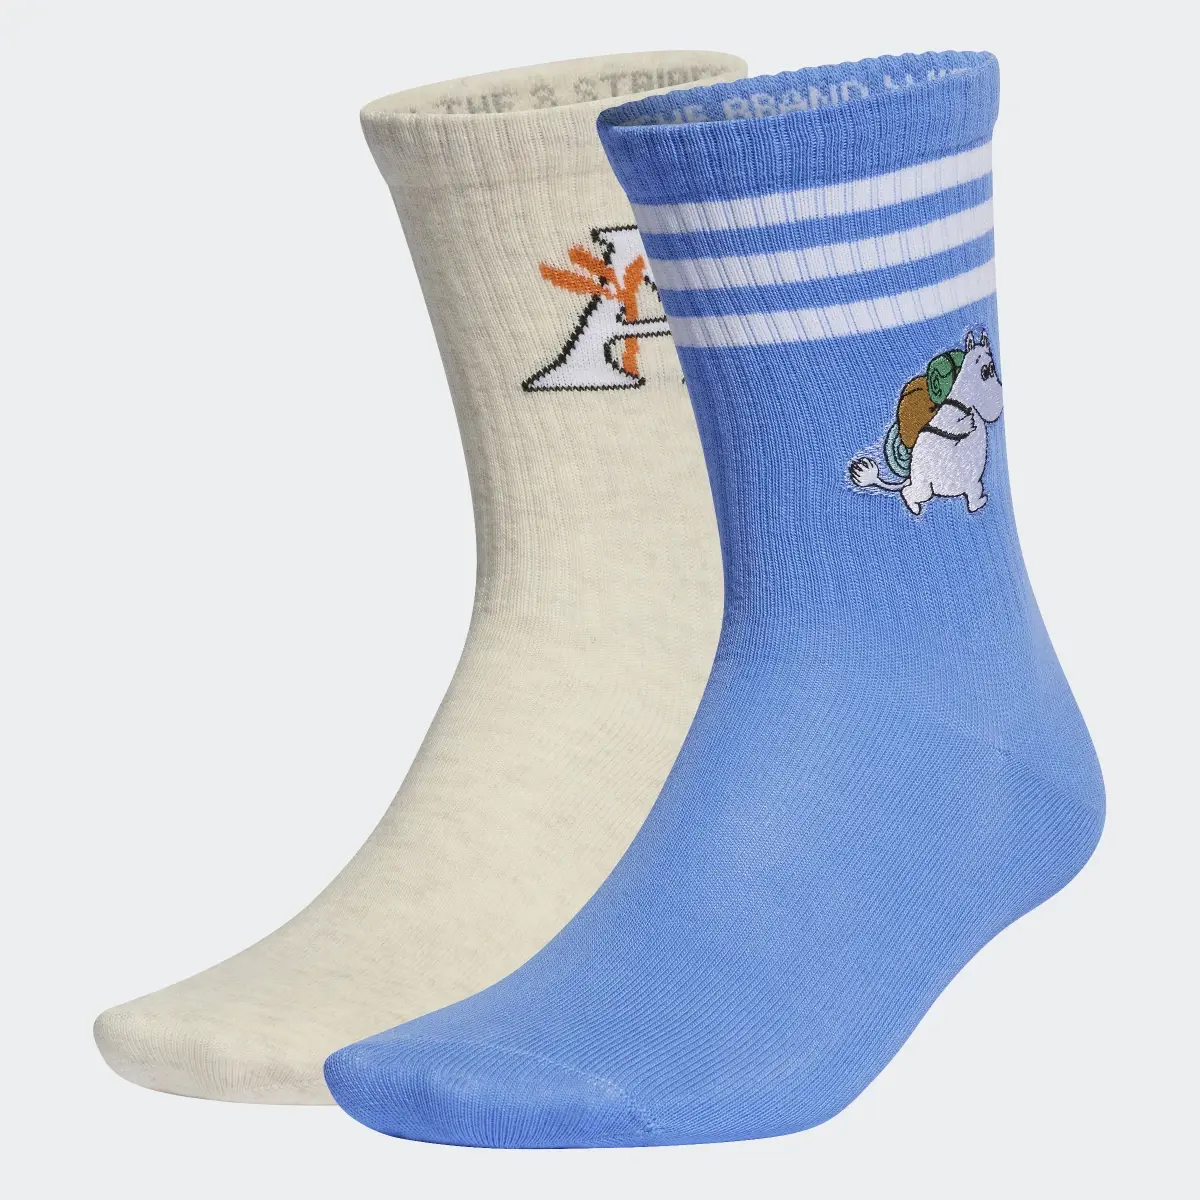 Adidas Originals X Moomin Bilekli Çorap - 2 Çift. 1